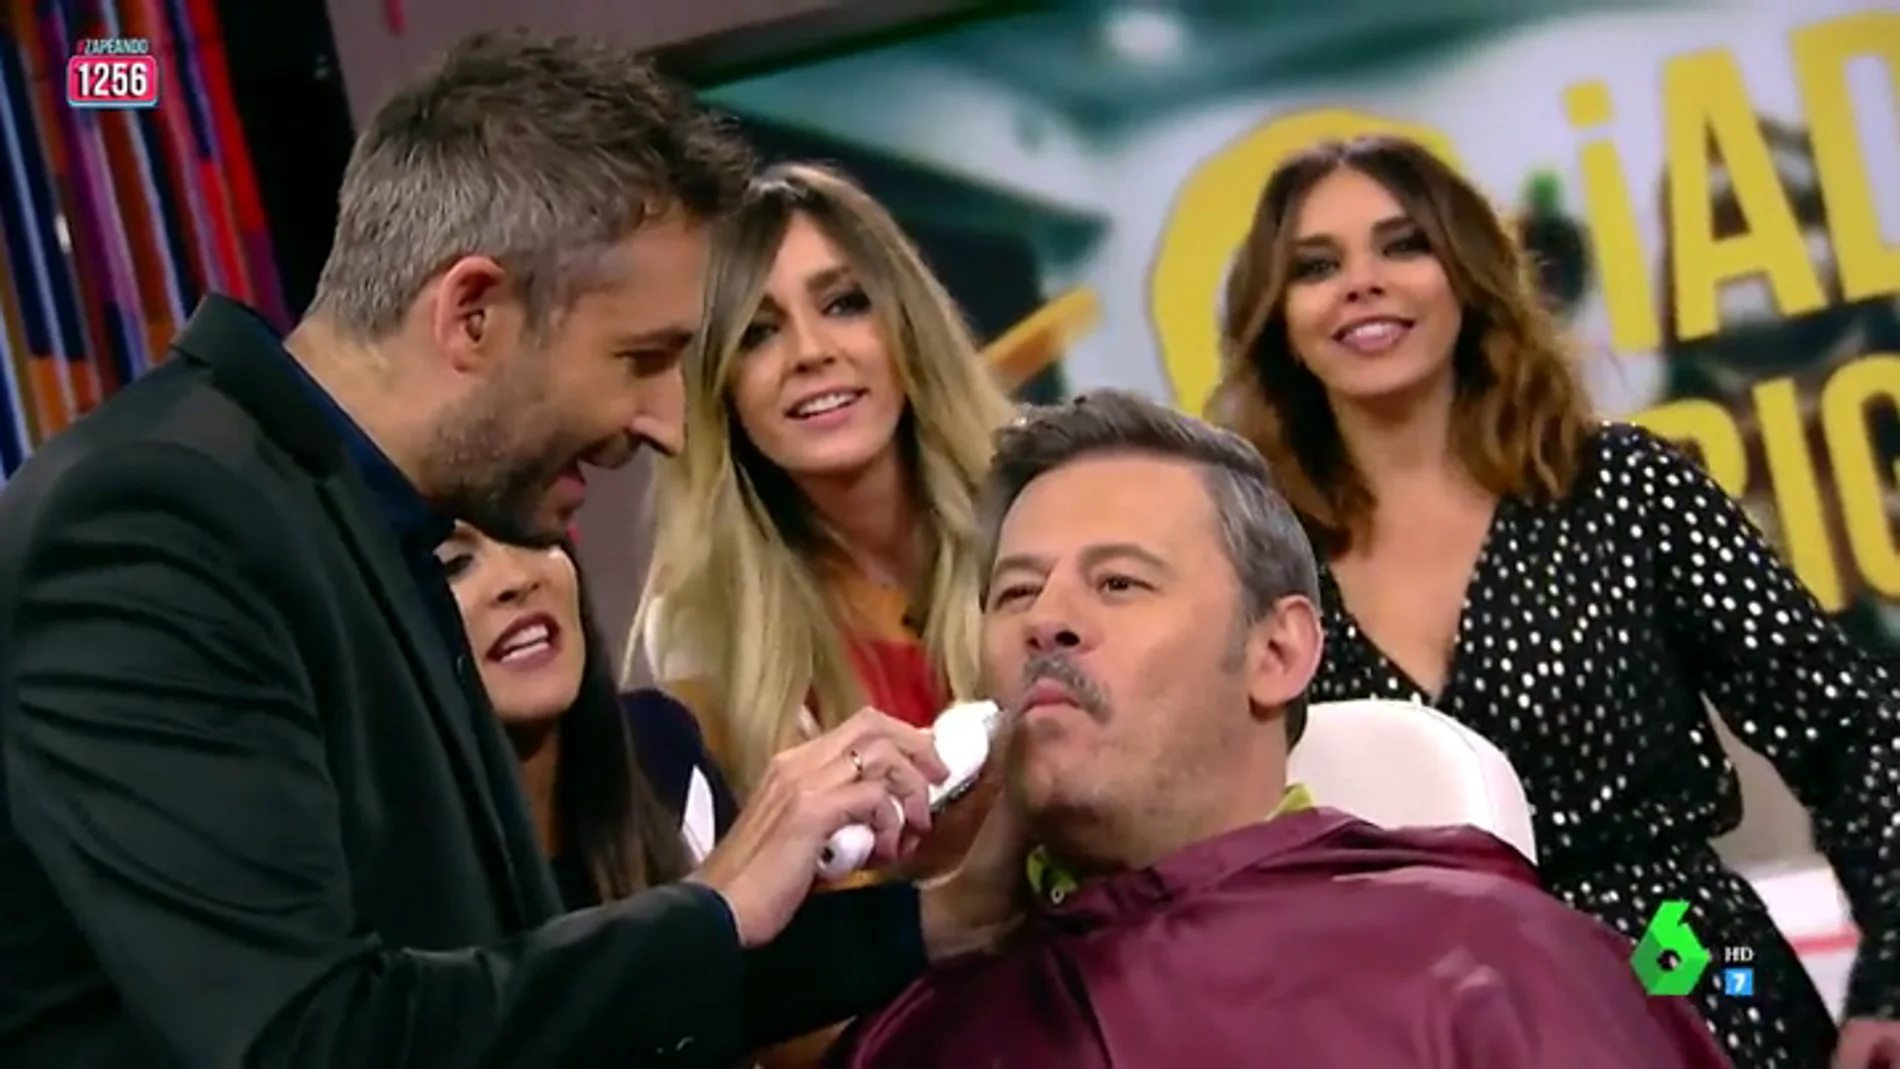 Frank Blanco afeite el bigote a Miki Nadal